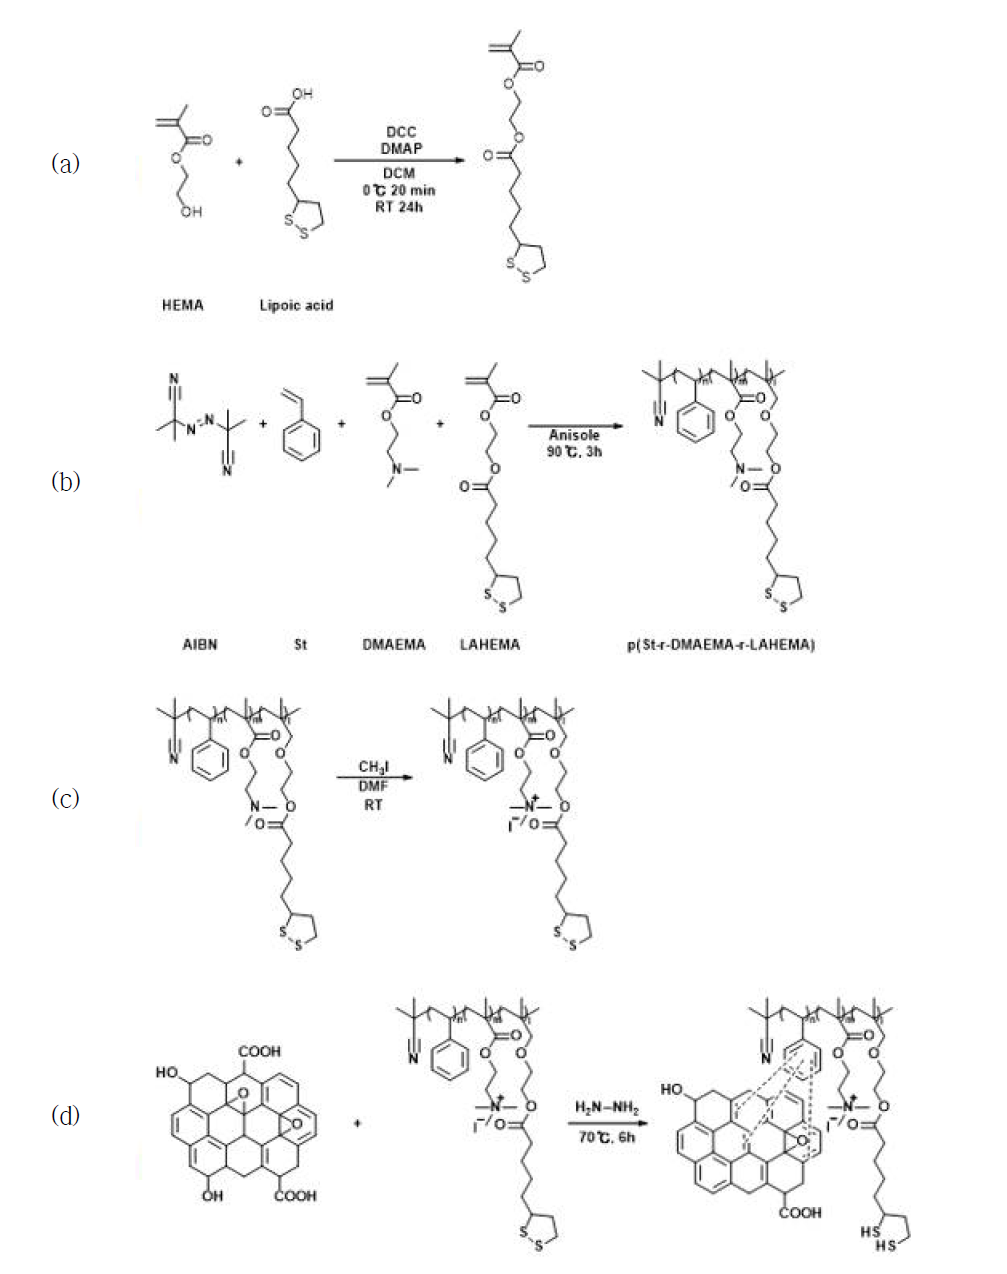 (a) HEMA와 lipoic acid의 esterification 반응, (b) styrene, DMAEMA 그리고 LAHEMA의 자유 라디칼 중합 반응, (c) p(St-r-DMAEMA-r-LAHEMA)의 quaternization 반응, (d) p(St-r-DMAEMA-r-LAHEMA)이 붙어있는 기능성 그래핀 제조